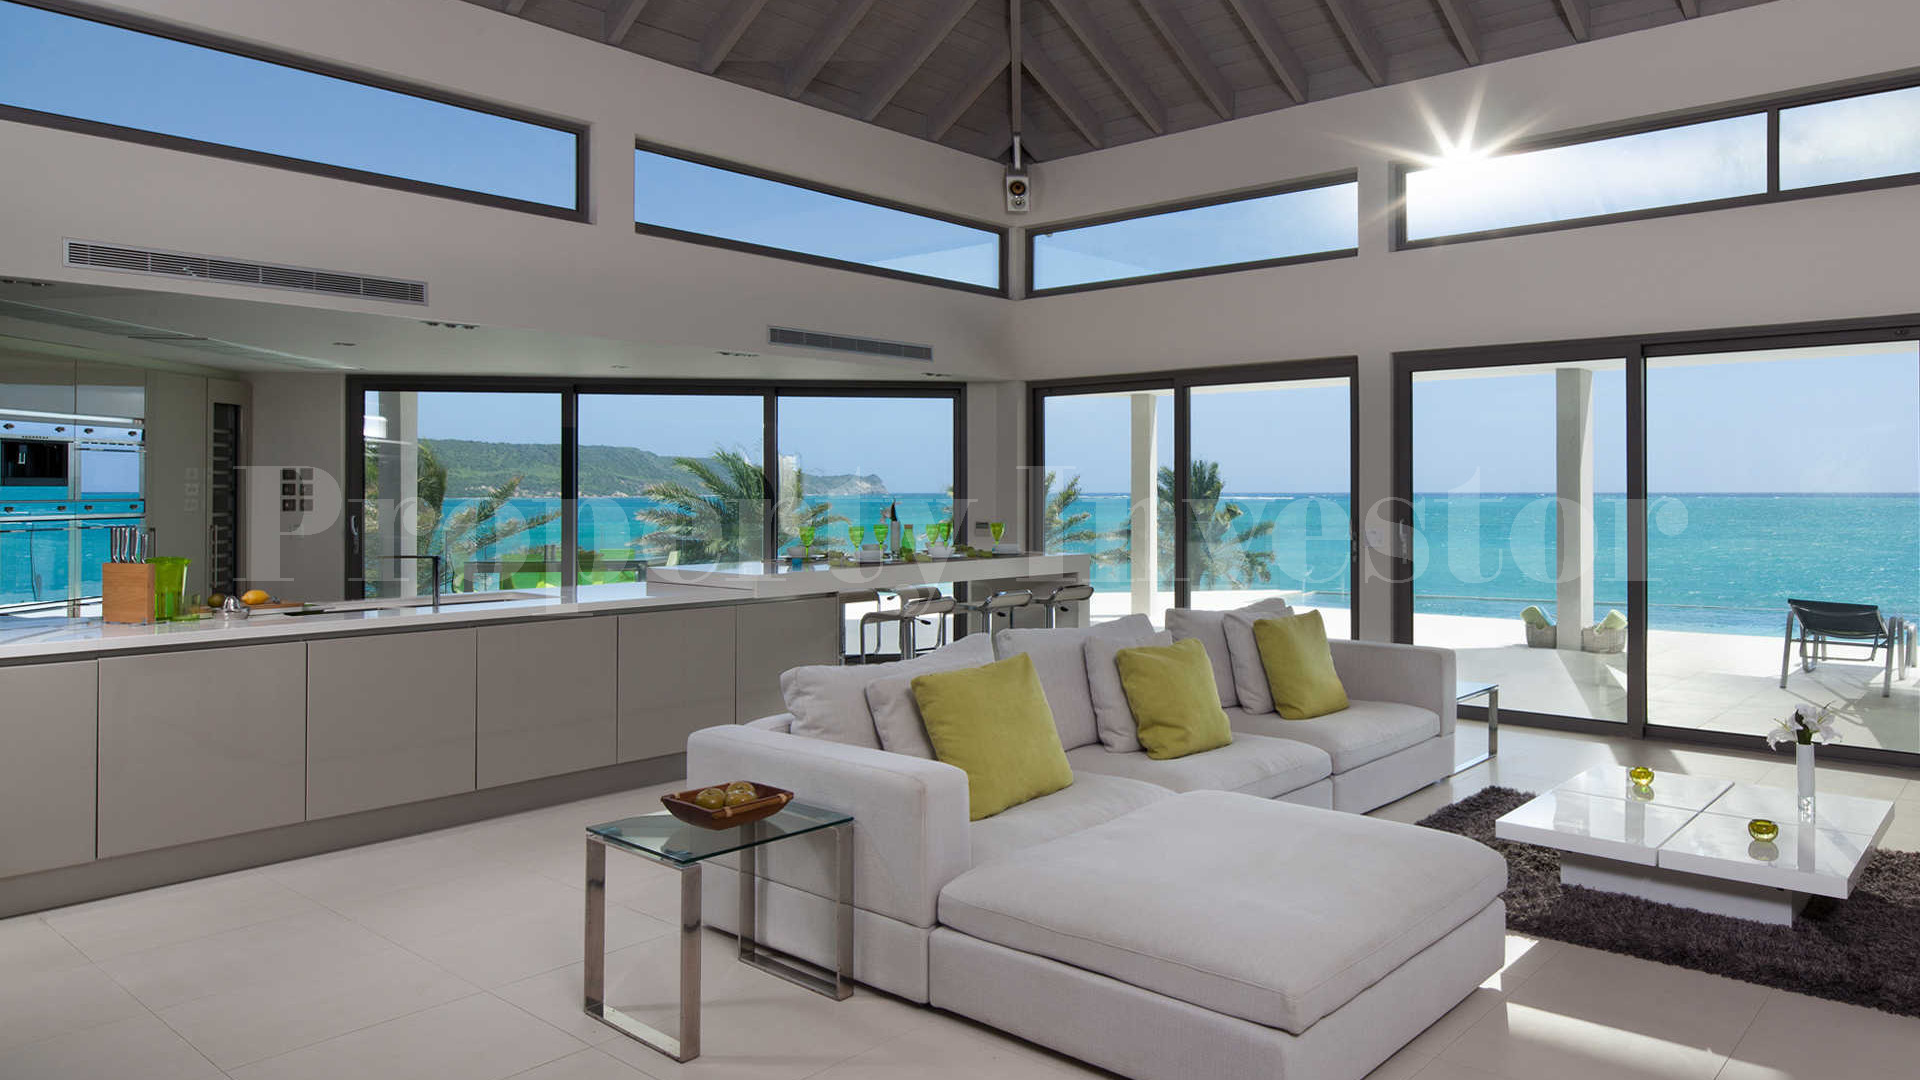 Income Generating 6 Bedroom Villa & Residential Development for Sale in Antigua